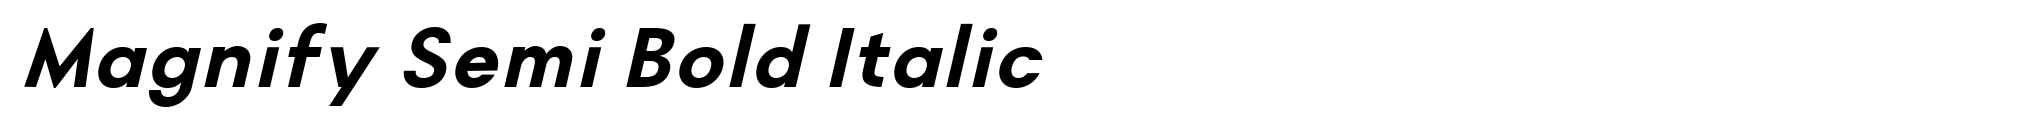 Magnify Semi Bold Italic image